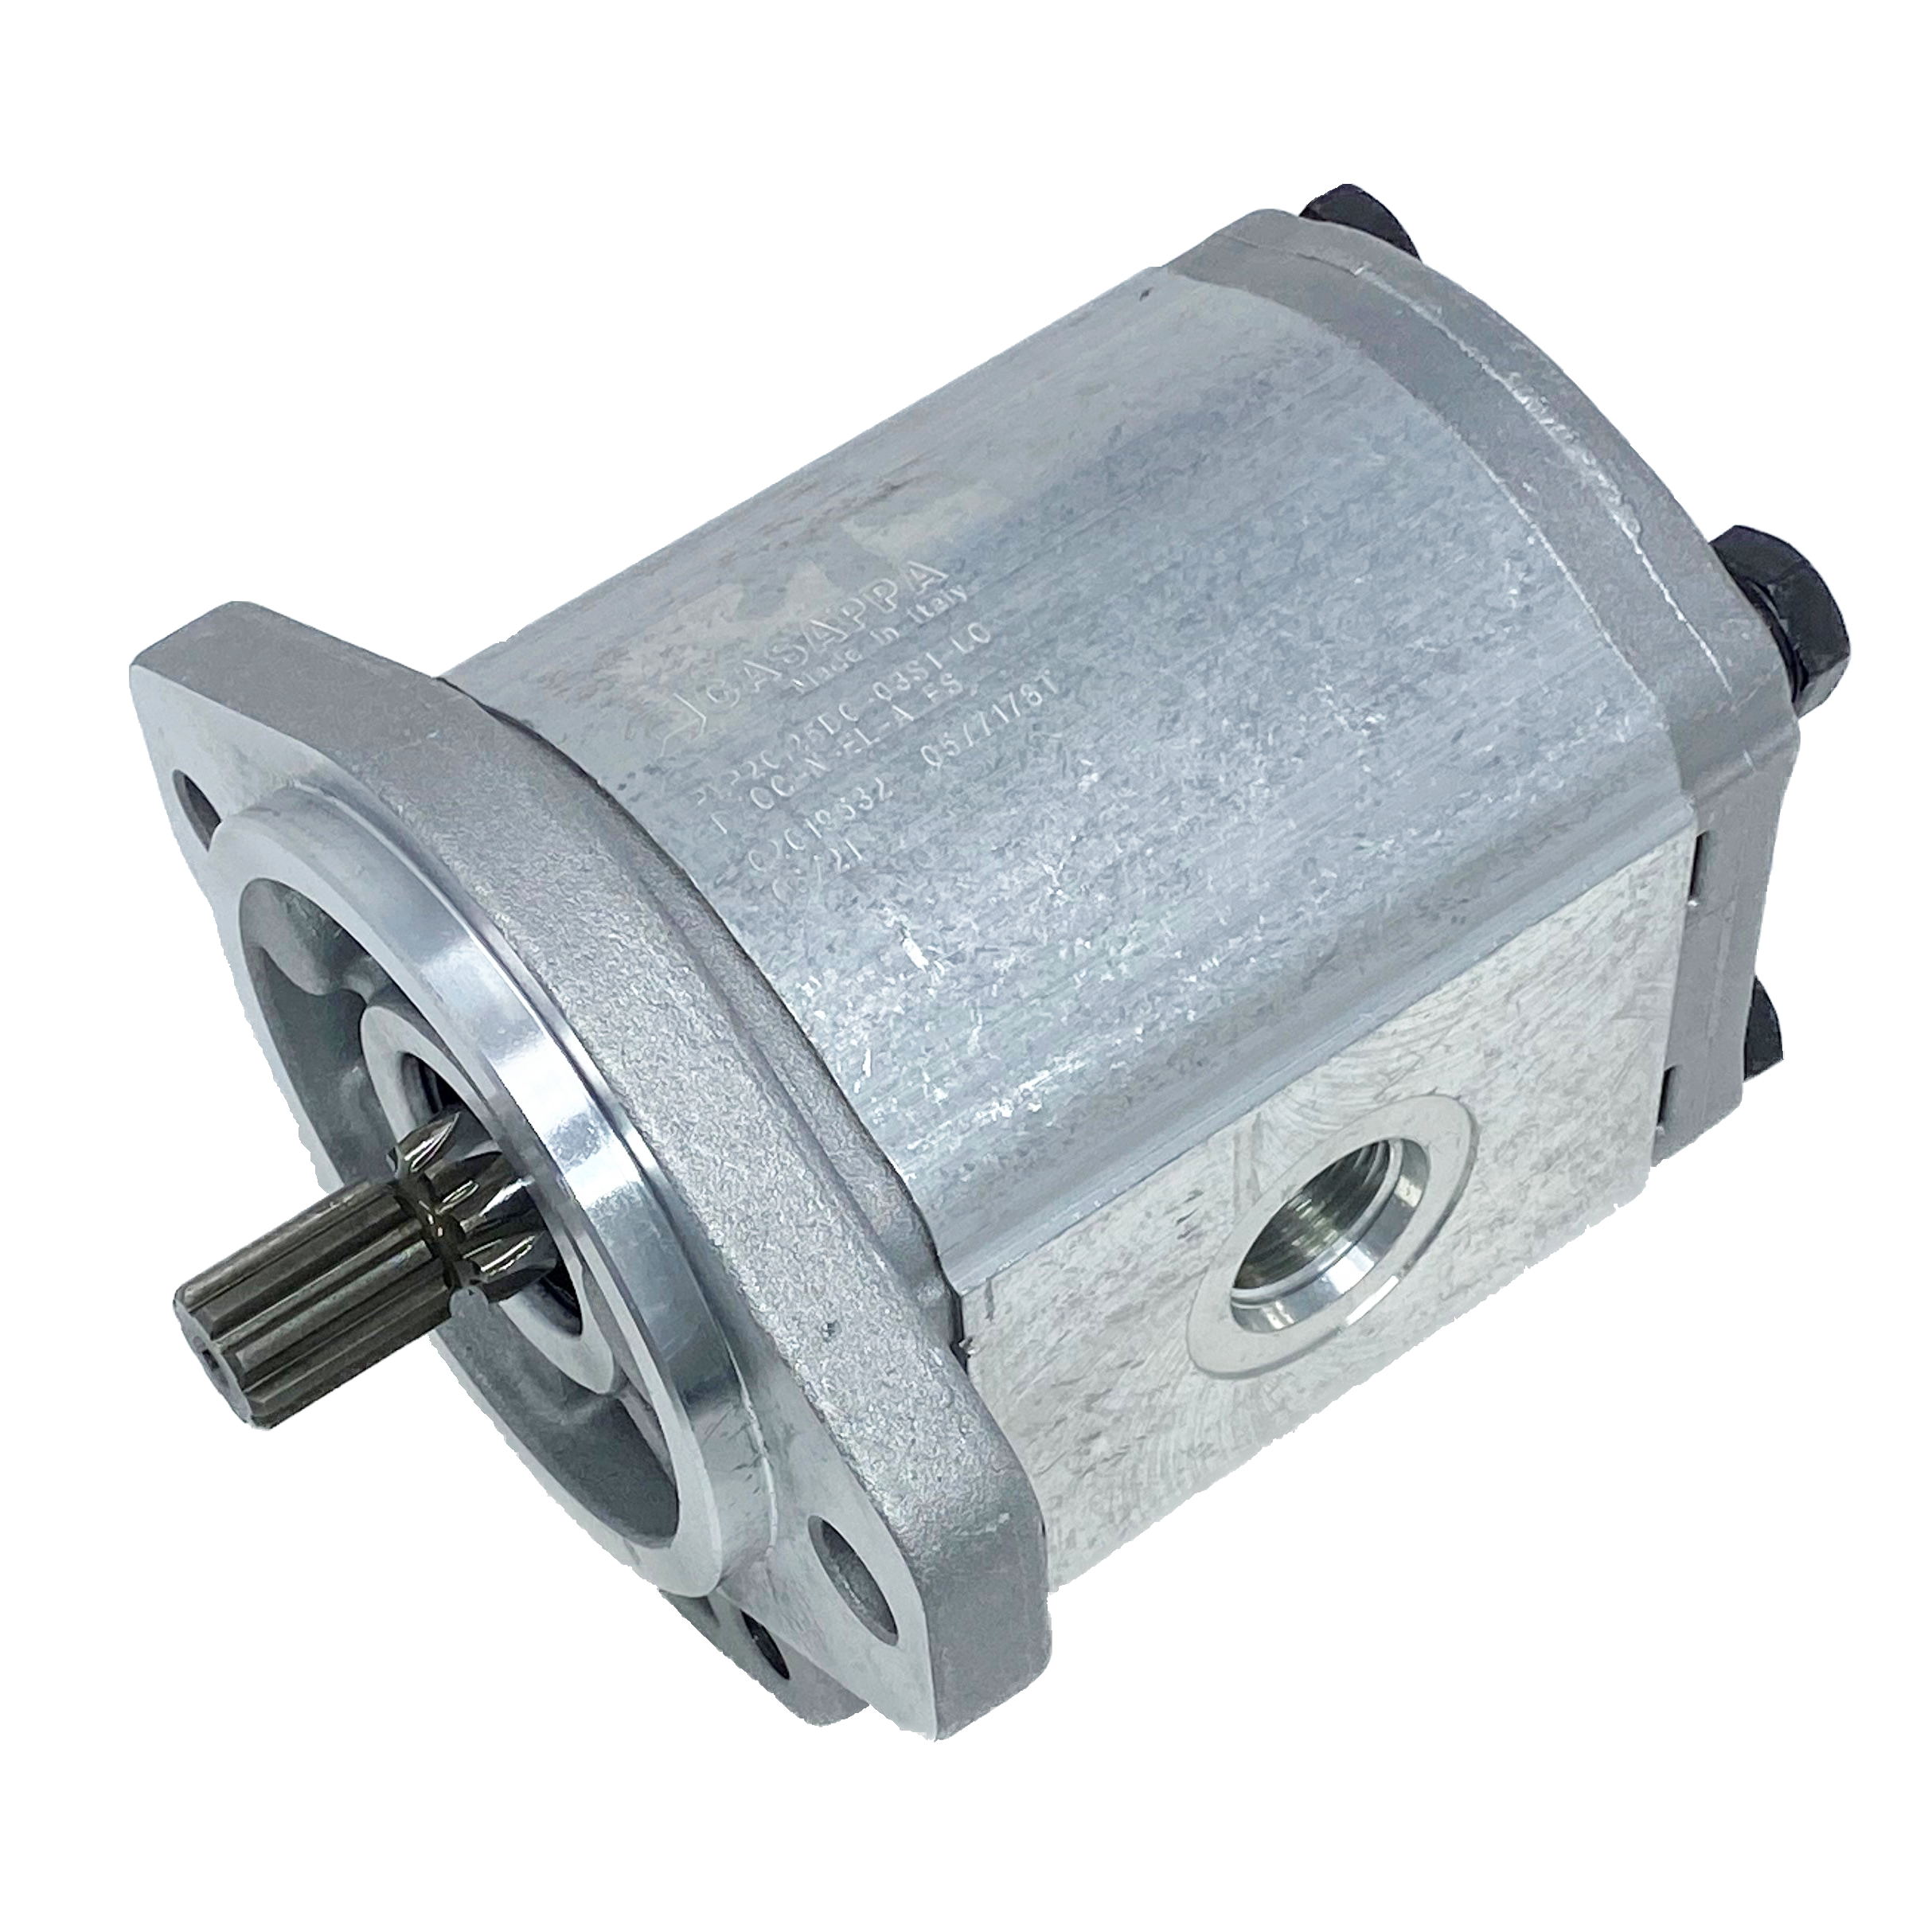 PLM20.25R0-07S1-LOC/OD-N-EL : Casappa Polaris Gear Motor, 26.42cc, 2465psi Rated, 3045RPM, Reversible Rear External Drain, 11T 16/32dp Shaft, SAE A 2-Bolt Flange, 0.625 (5/8") #10 SAE Inlet, 0.75 (3/4") #12 SAE Outlet, Aluminum Body & Flange